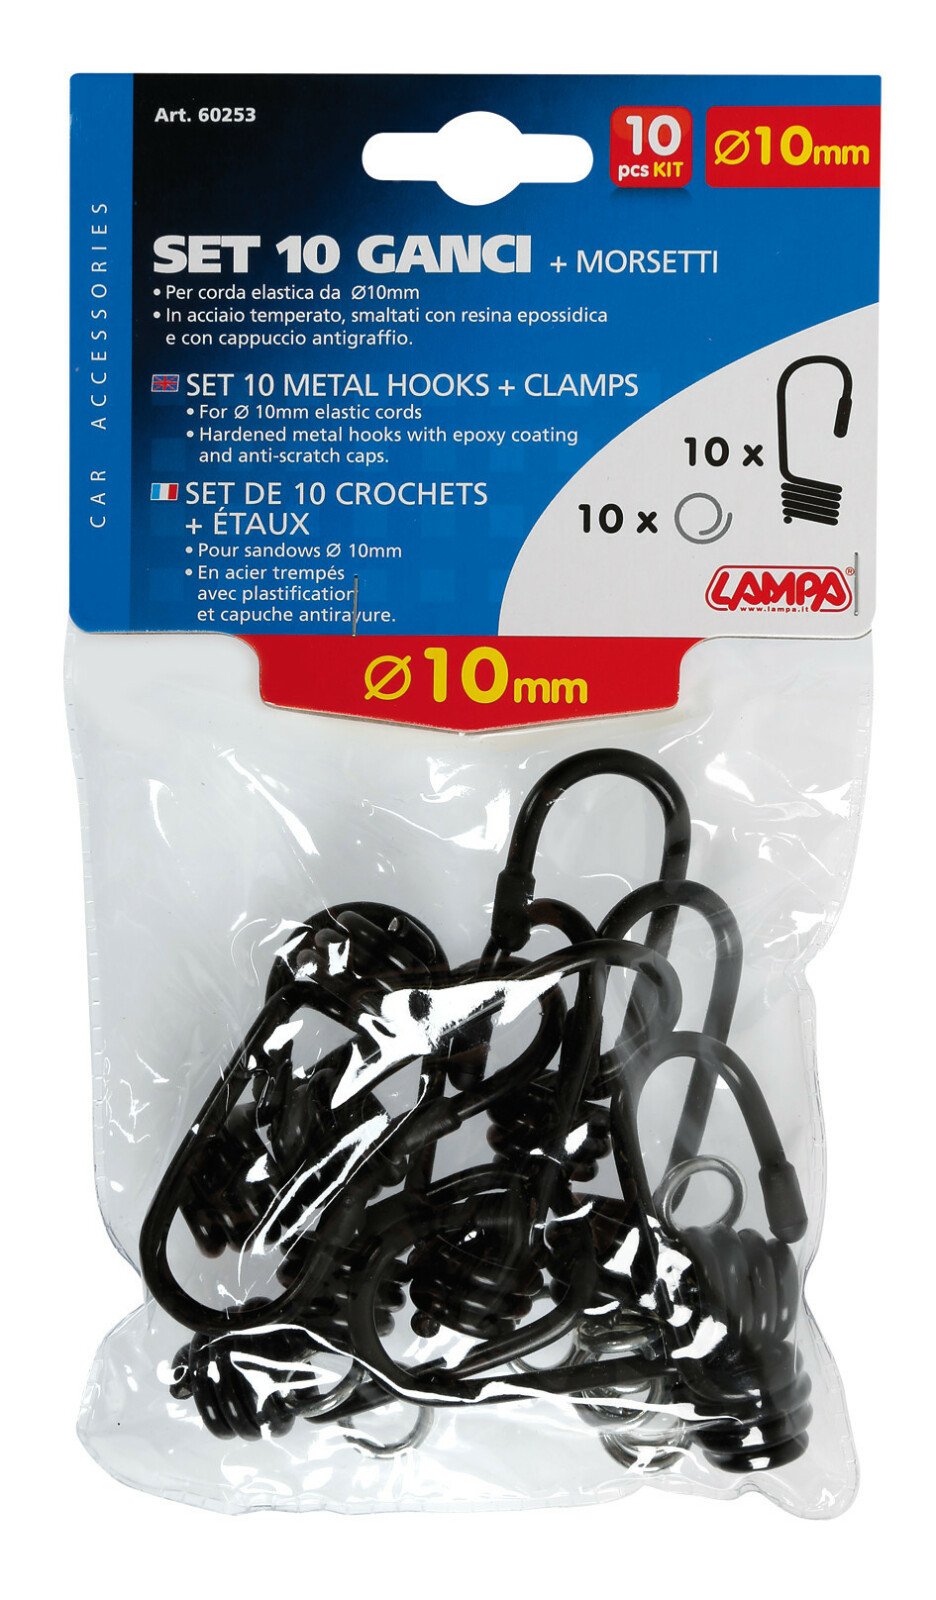 Set 10 metal hooks + clamps - Ø10mm thumb